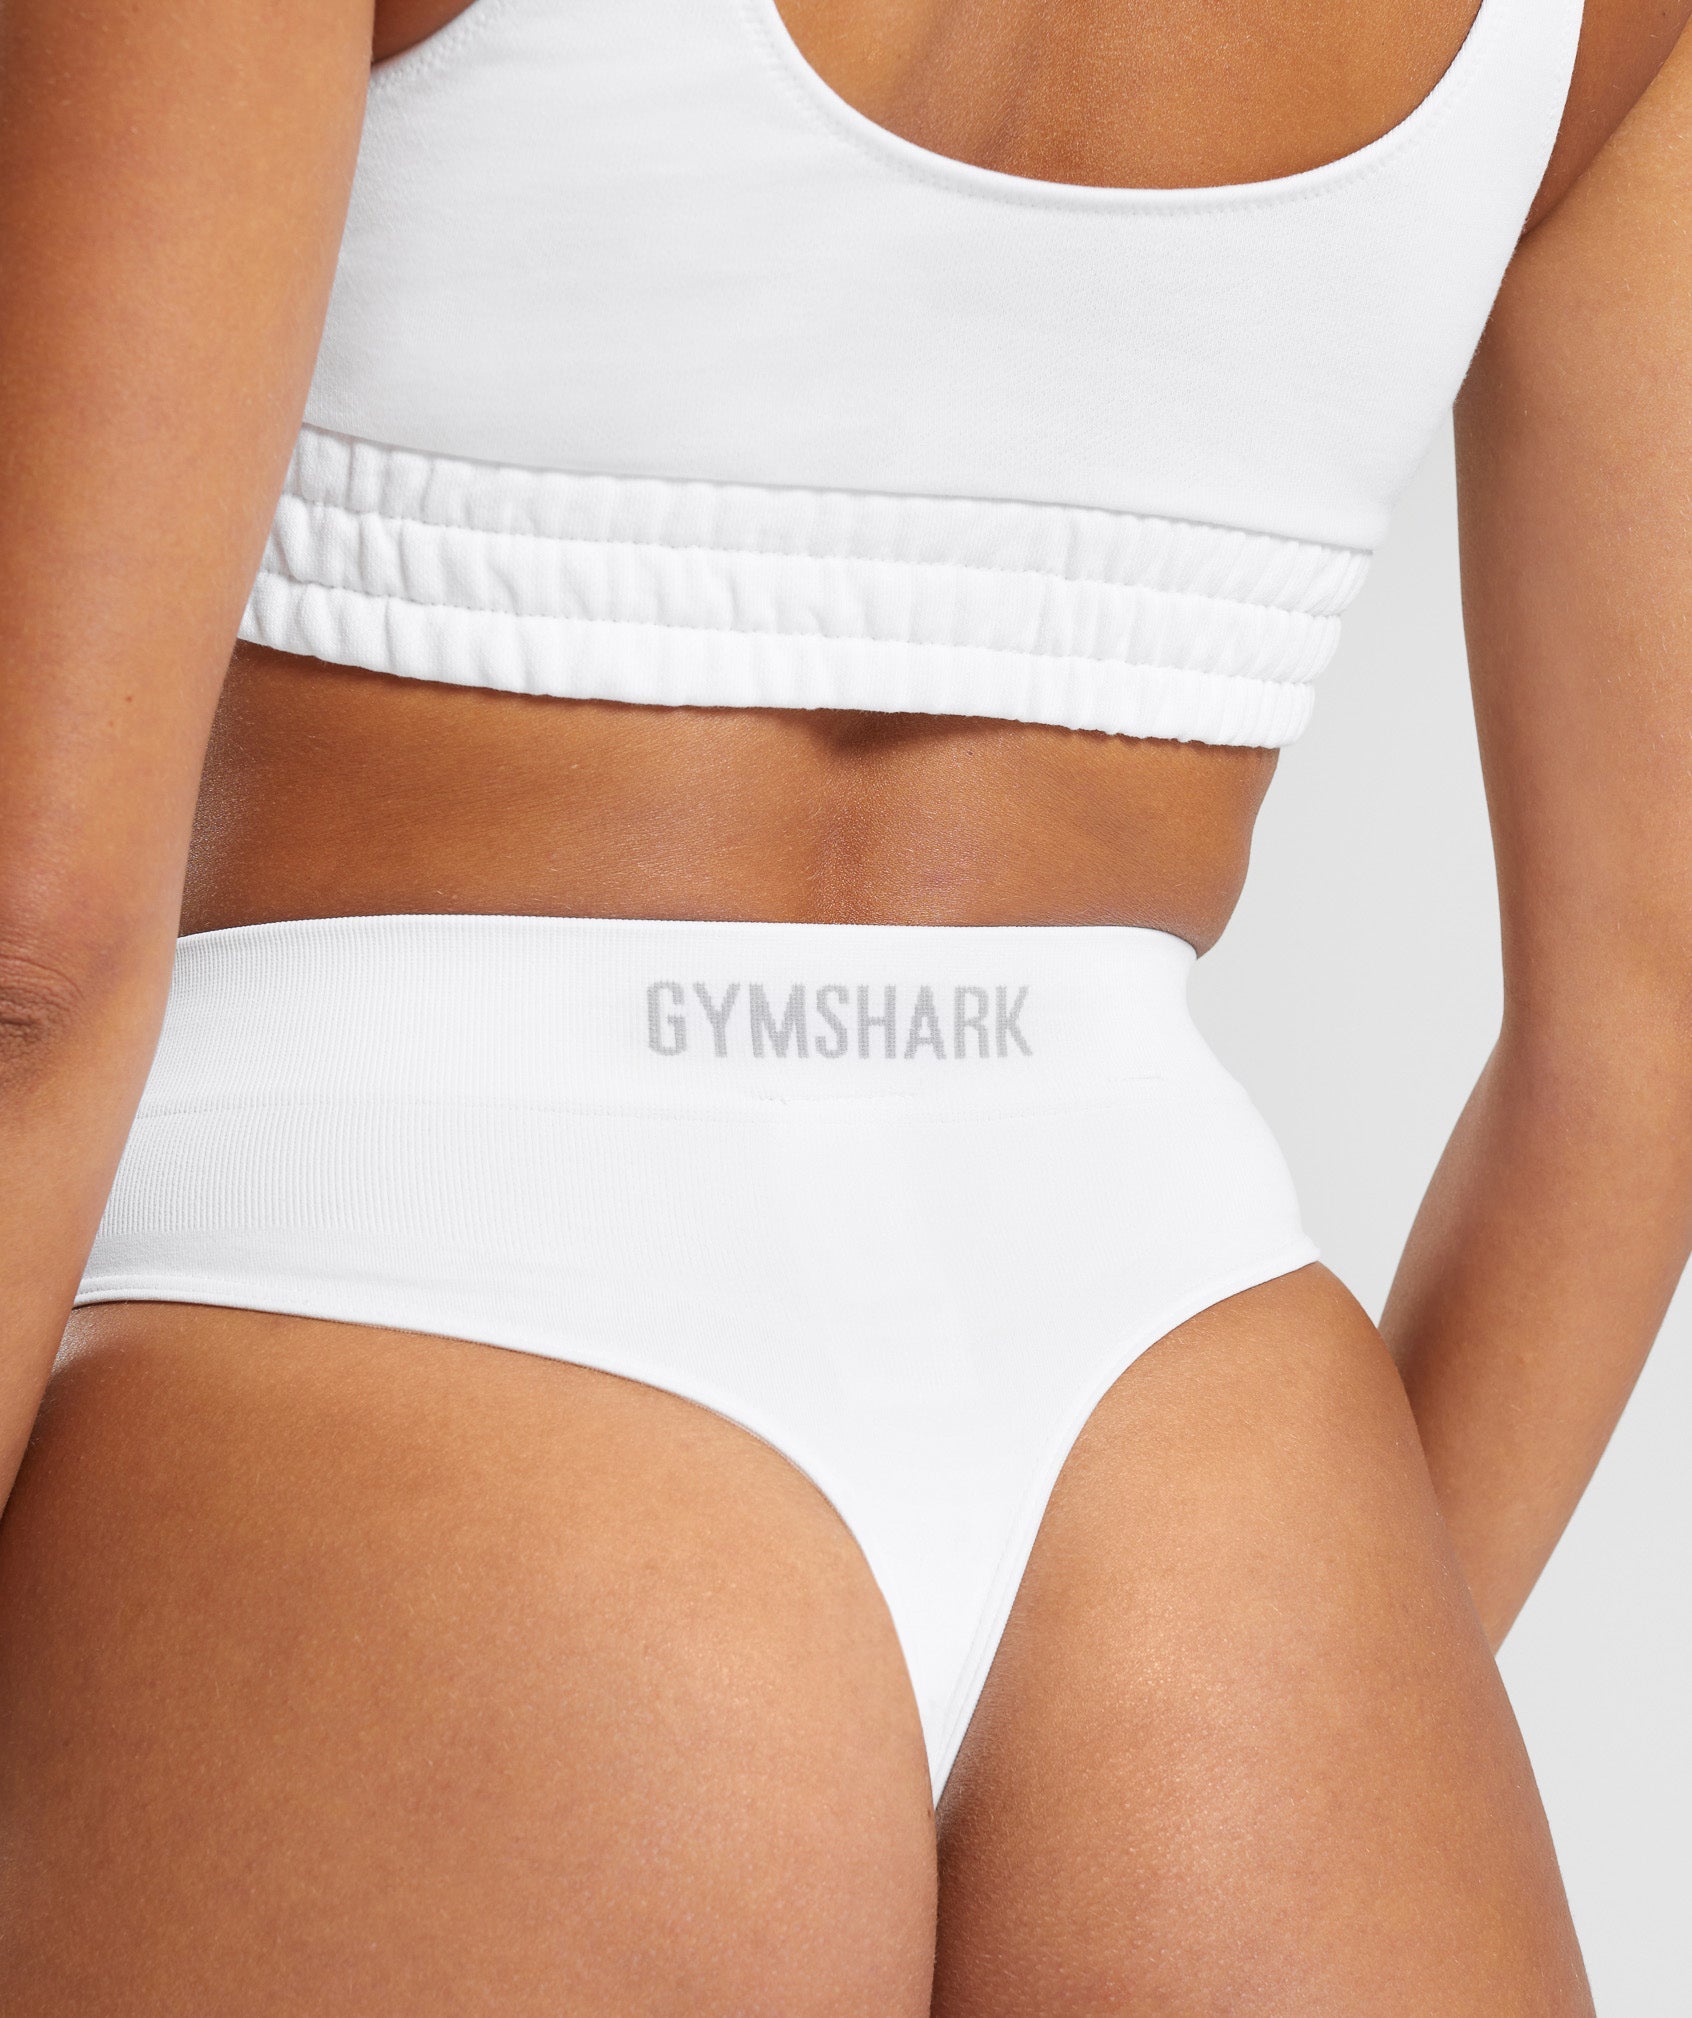 Buy Cheap Womens Gymshark Underwear UK - Gymshark London